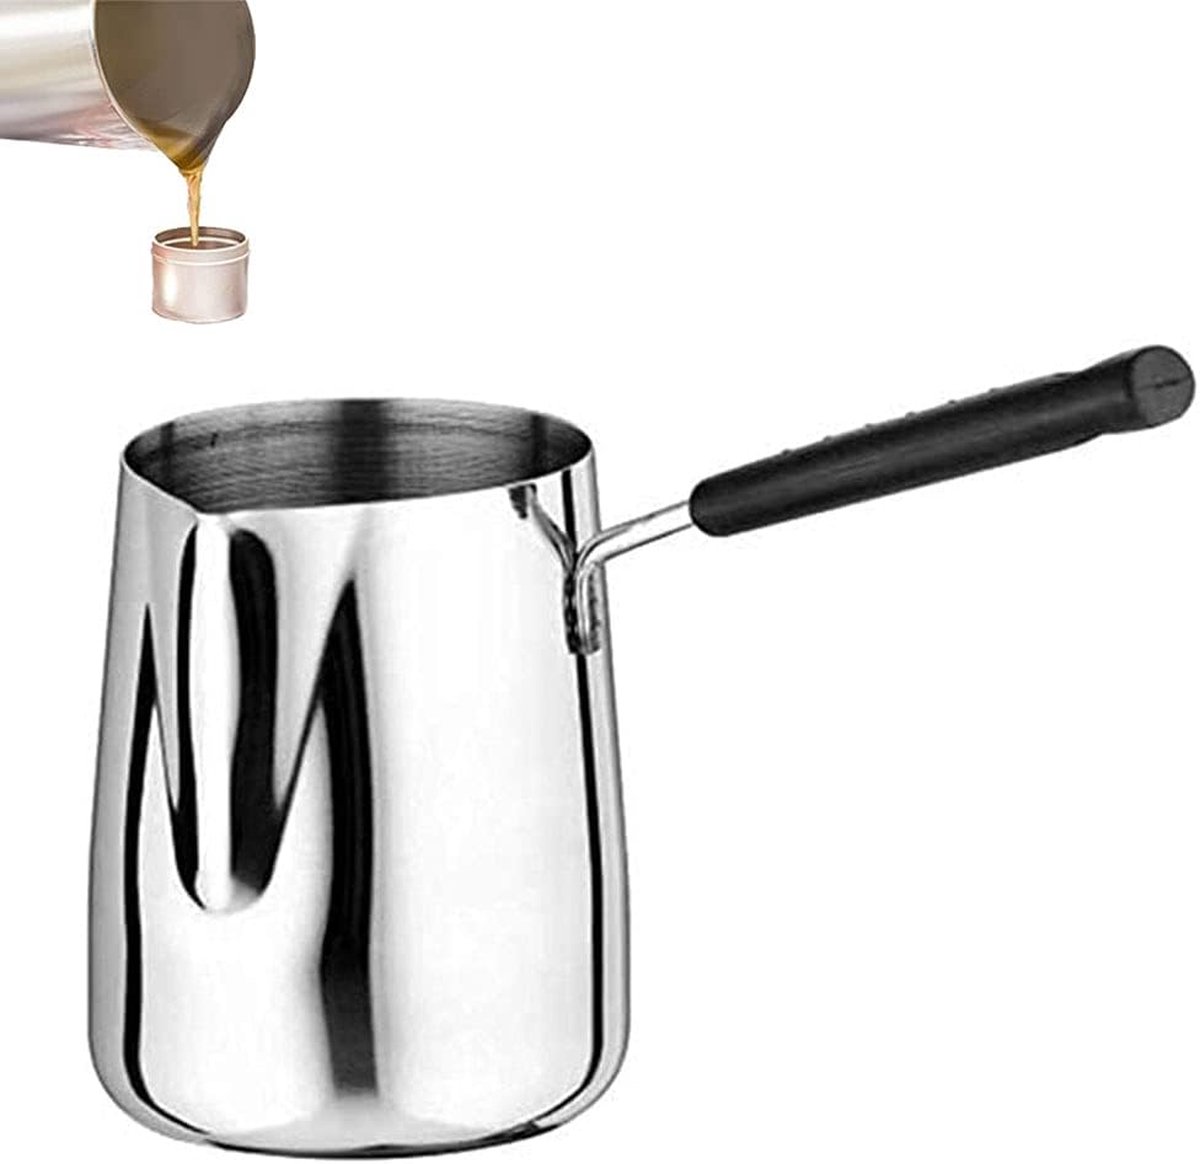 Stainless Steel Turkish Coffee Pot, Mocha Pot, Frothing Milk Jug, Turkish Coffee Pot with Handle, Stainless Steel Jug, for Preparing Latte Coffee Art, Cappuccino, Espresso (600 ml / 21.12 oz)